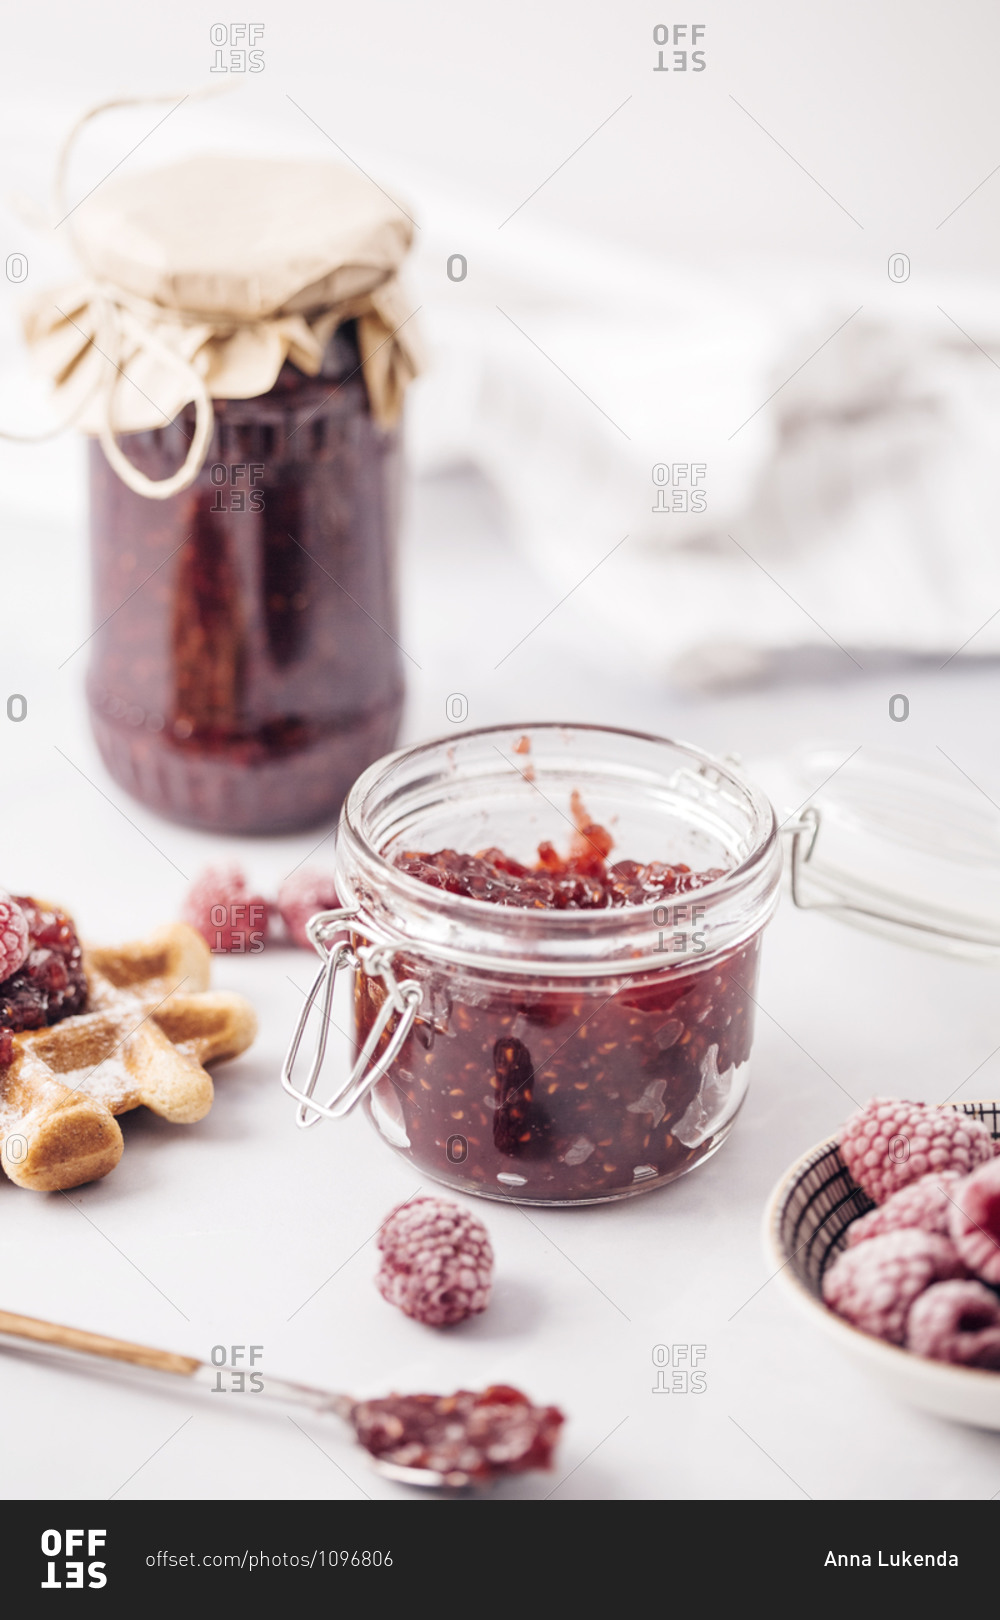 Frozen raspberries in bowl in front of a jar of homemade raspberry jam